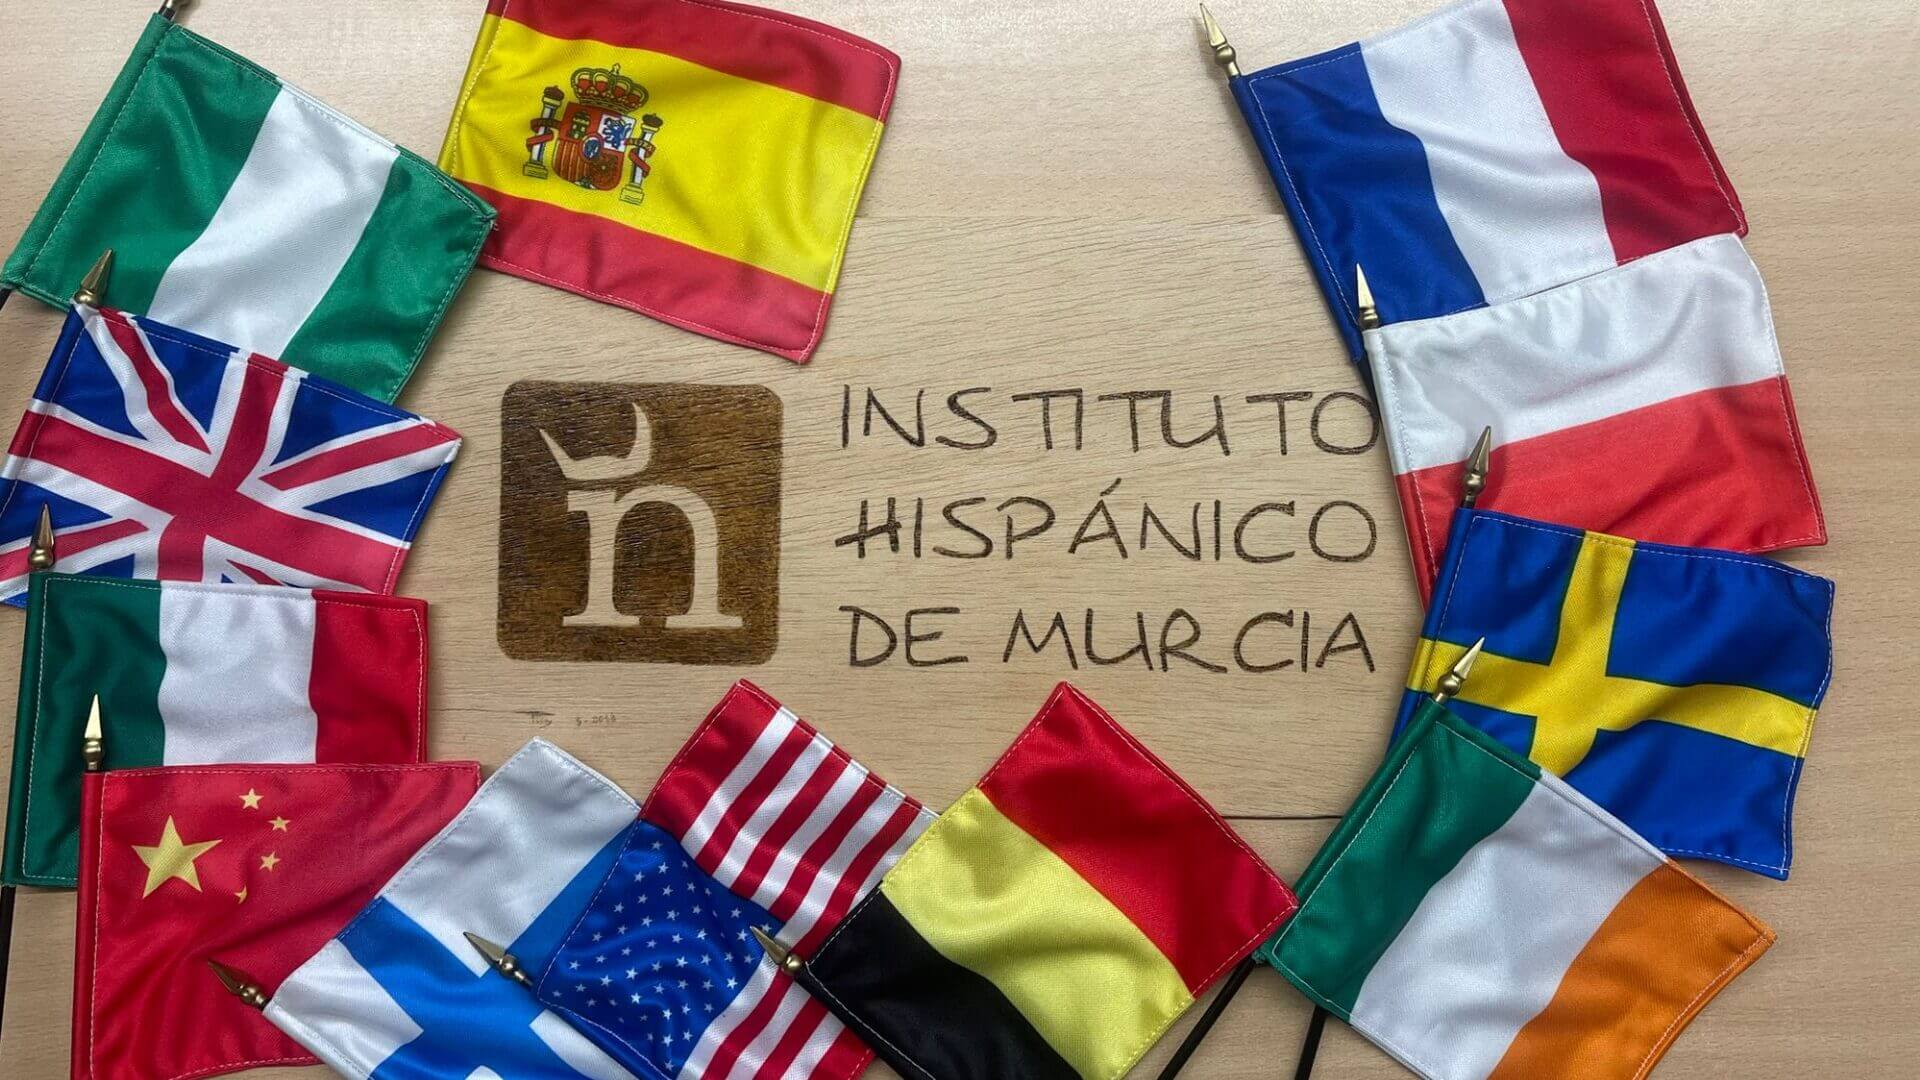 Instituto Hispánico de Murcia - NIE e Nazionalità: una guida completa per ottenerli